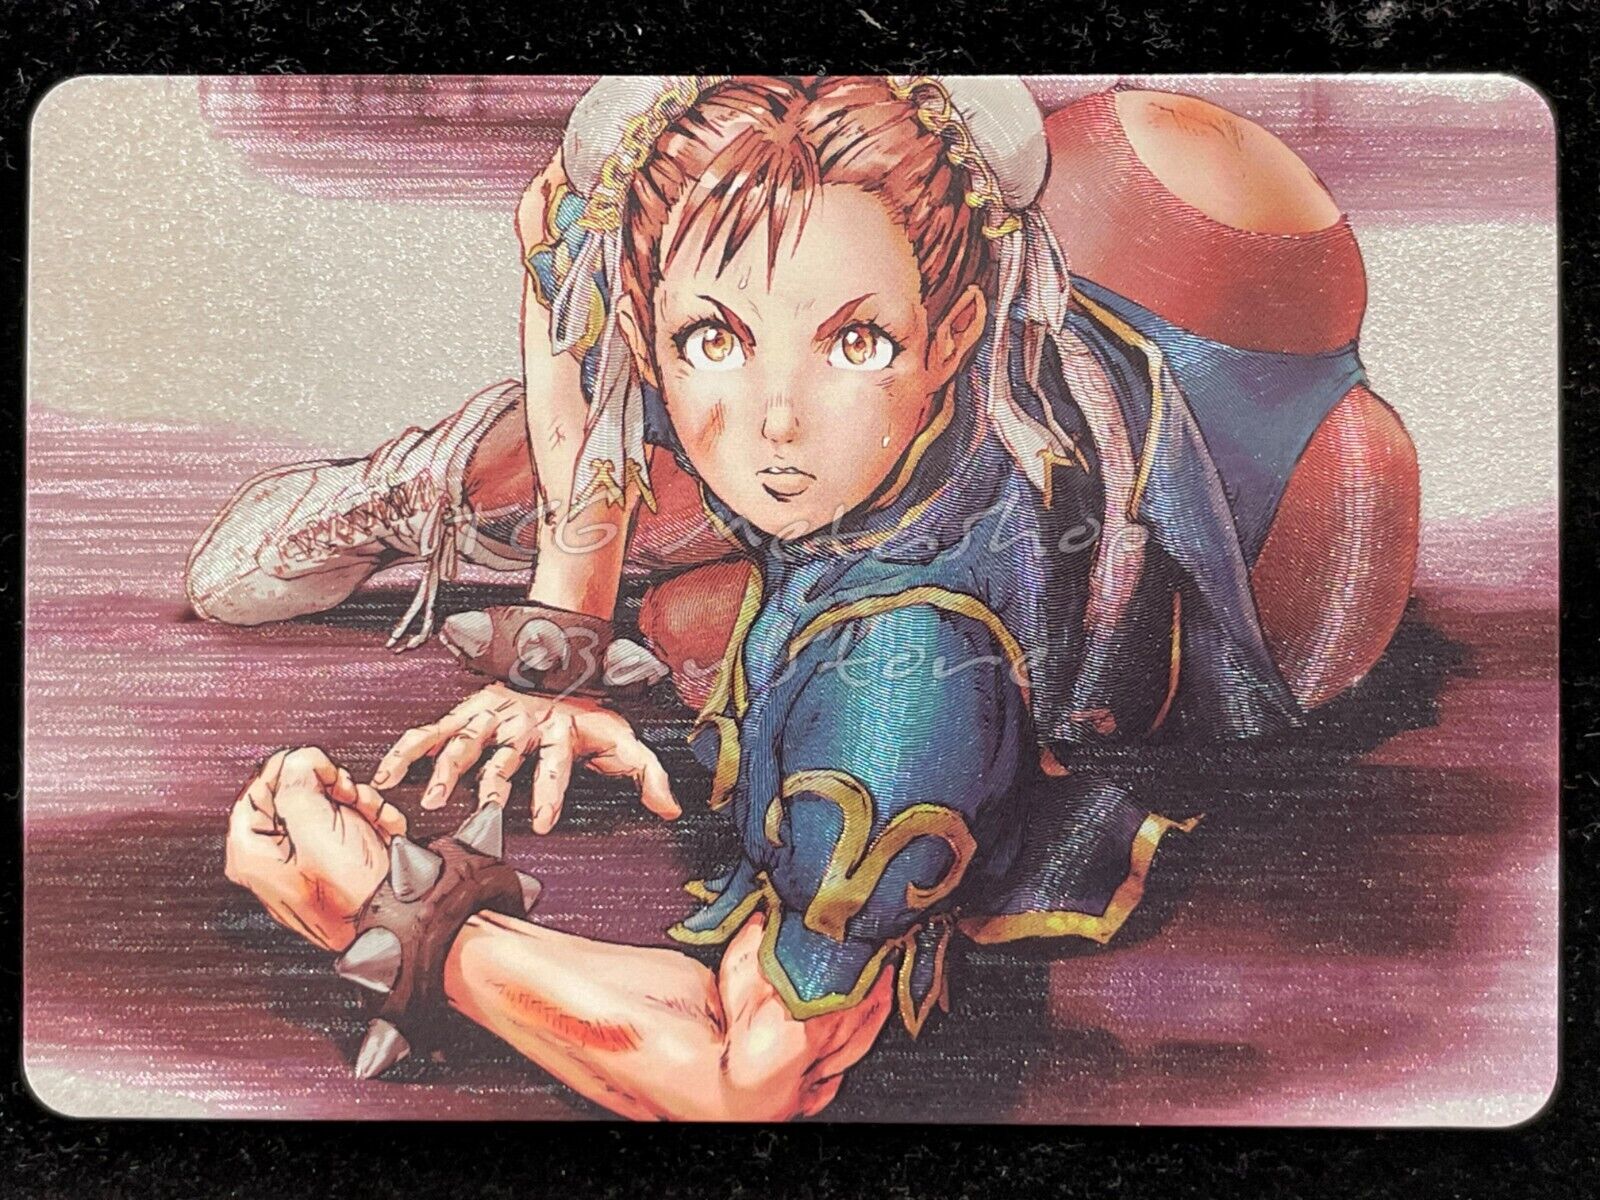 🔥 Chun-Li Street Fighter Goddess Story Anime Card ACG # 2350 🔥